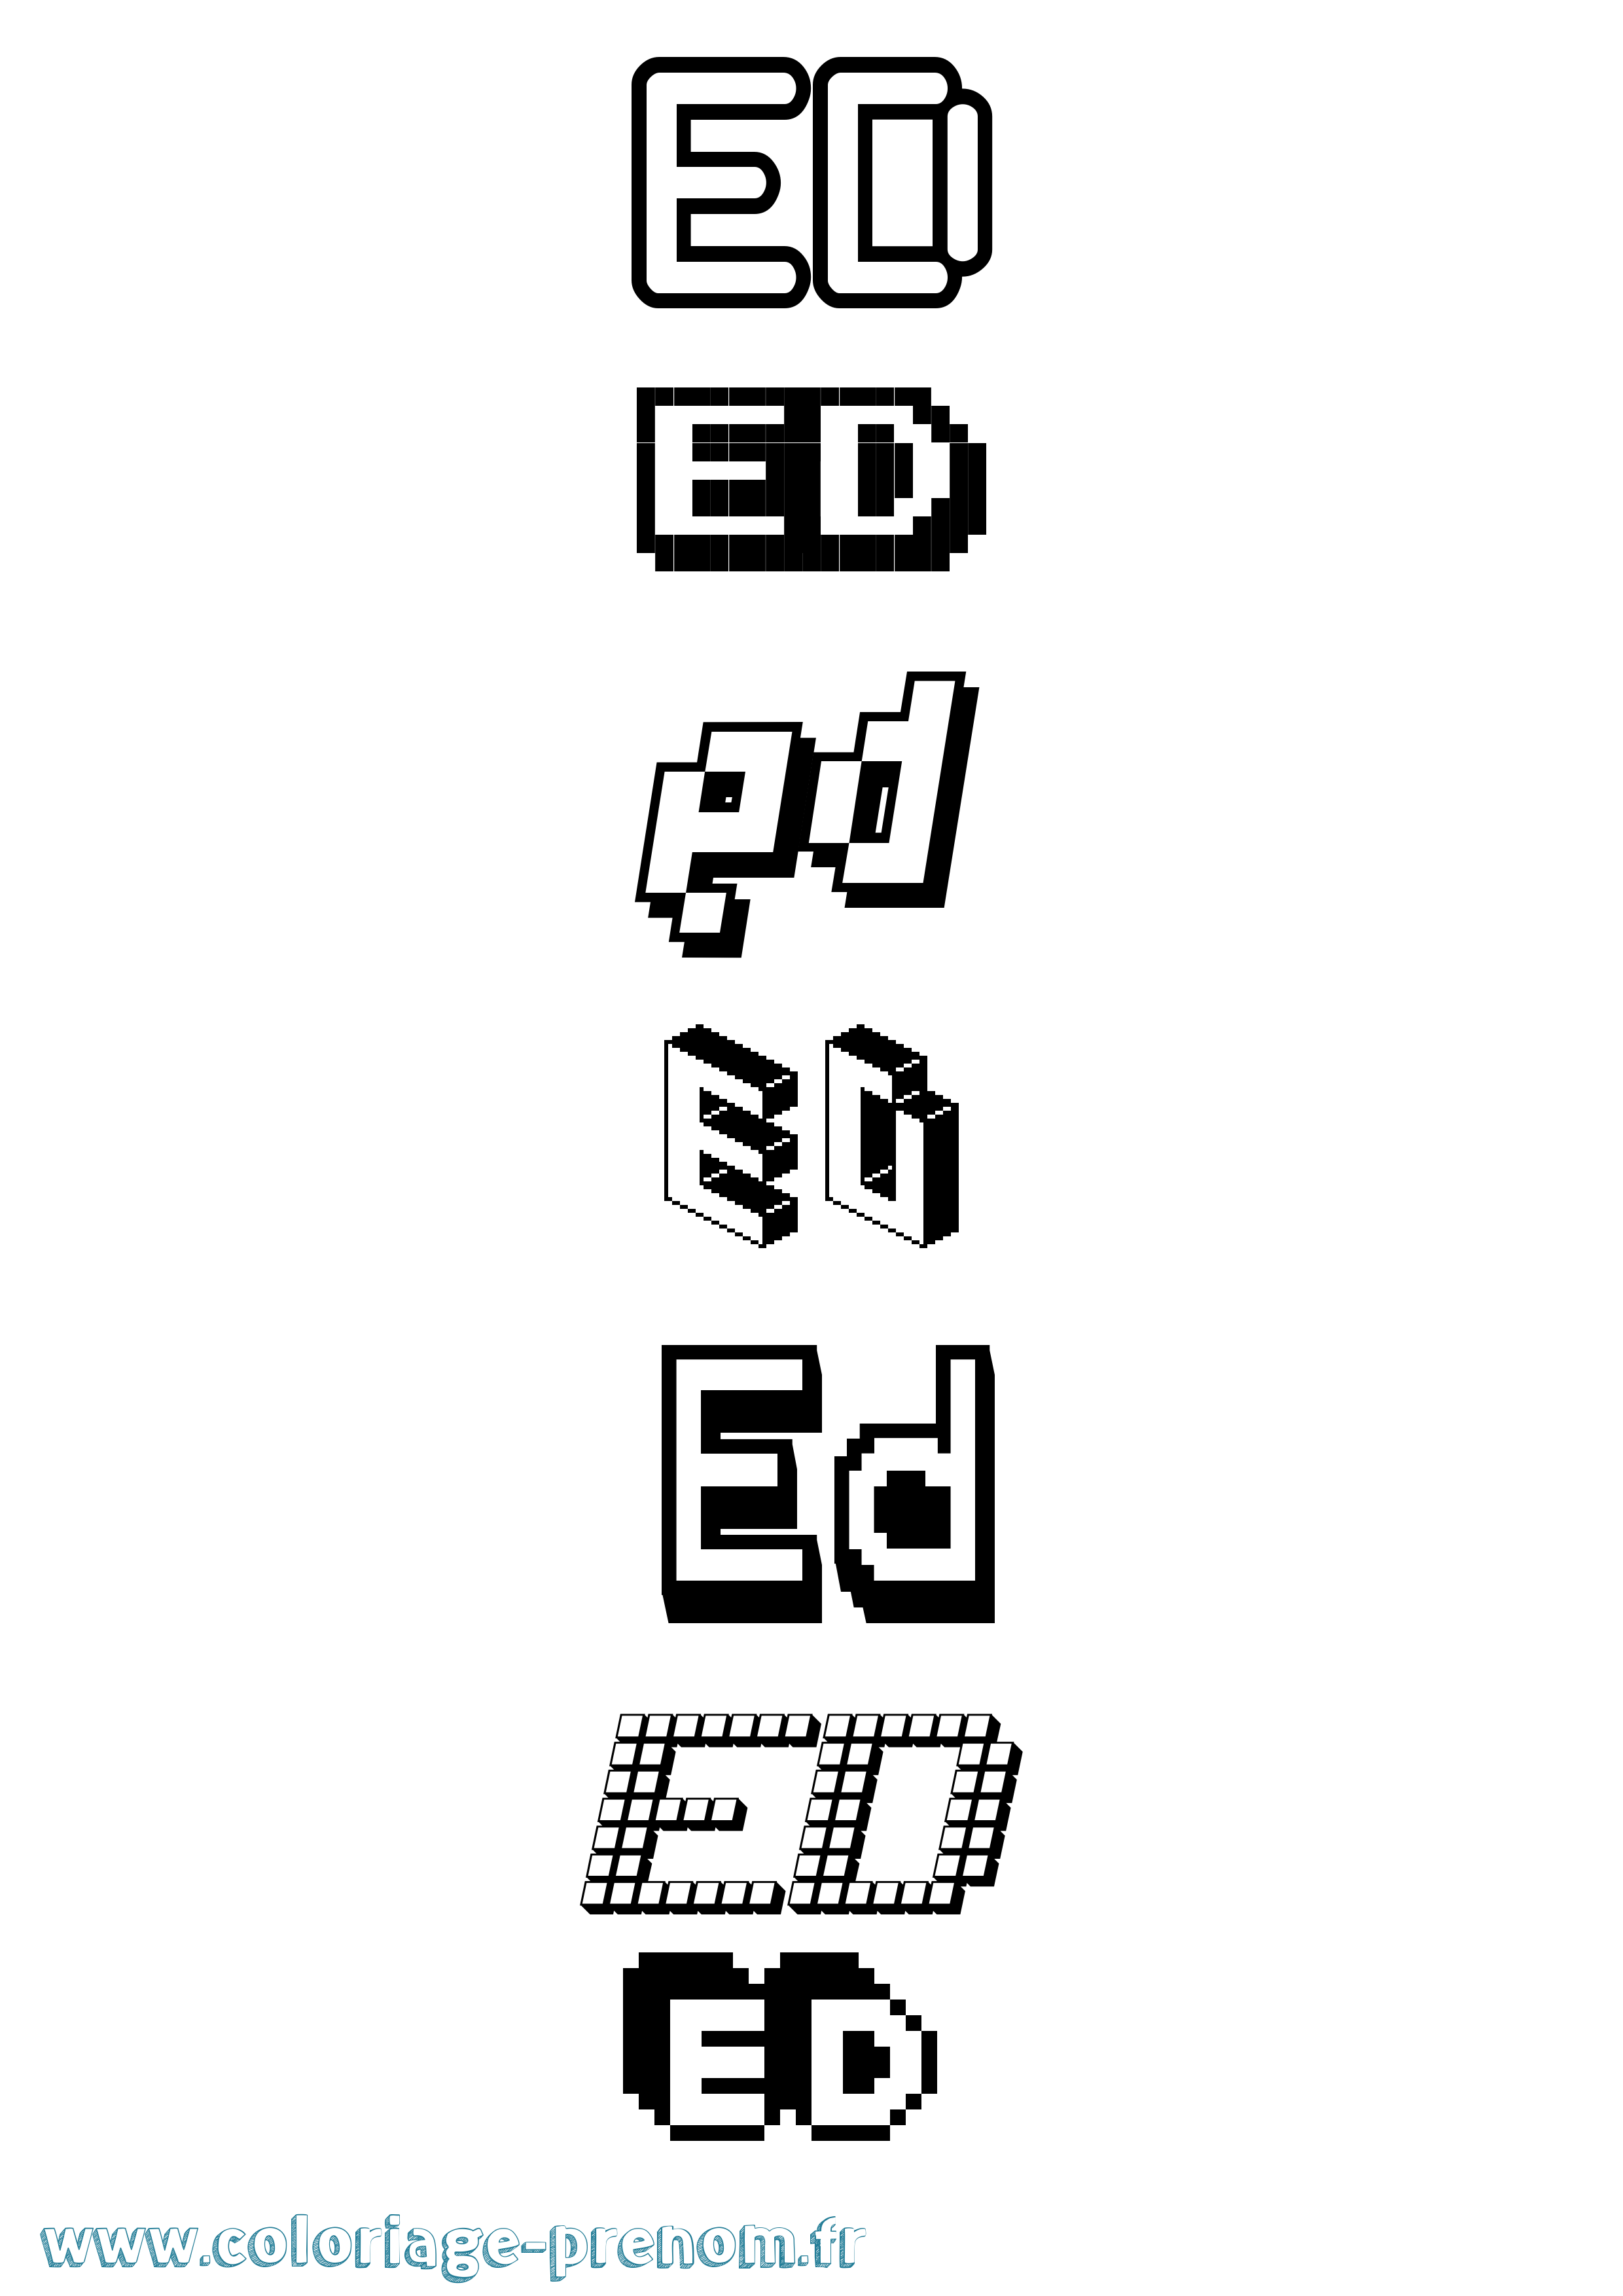 Coloriage prénom Ed Pixel